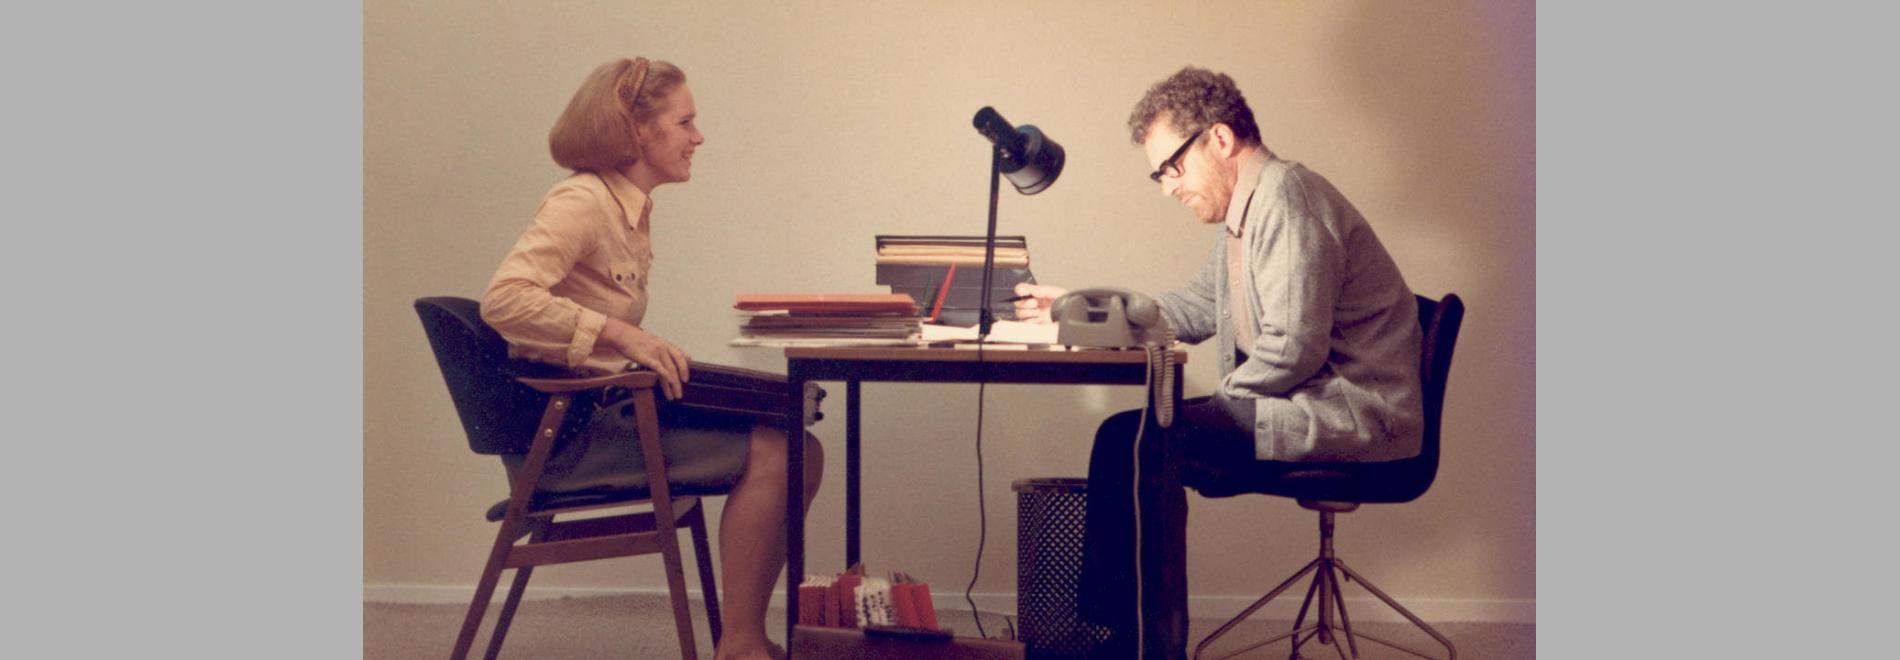 Scener ur ett äktenskap / Secretos de un matrimonio (Ingmar Bergman, 1973)